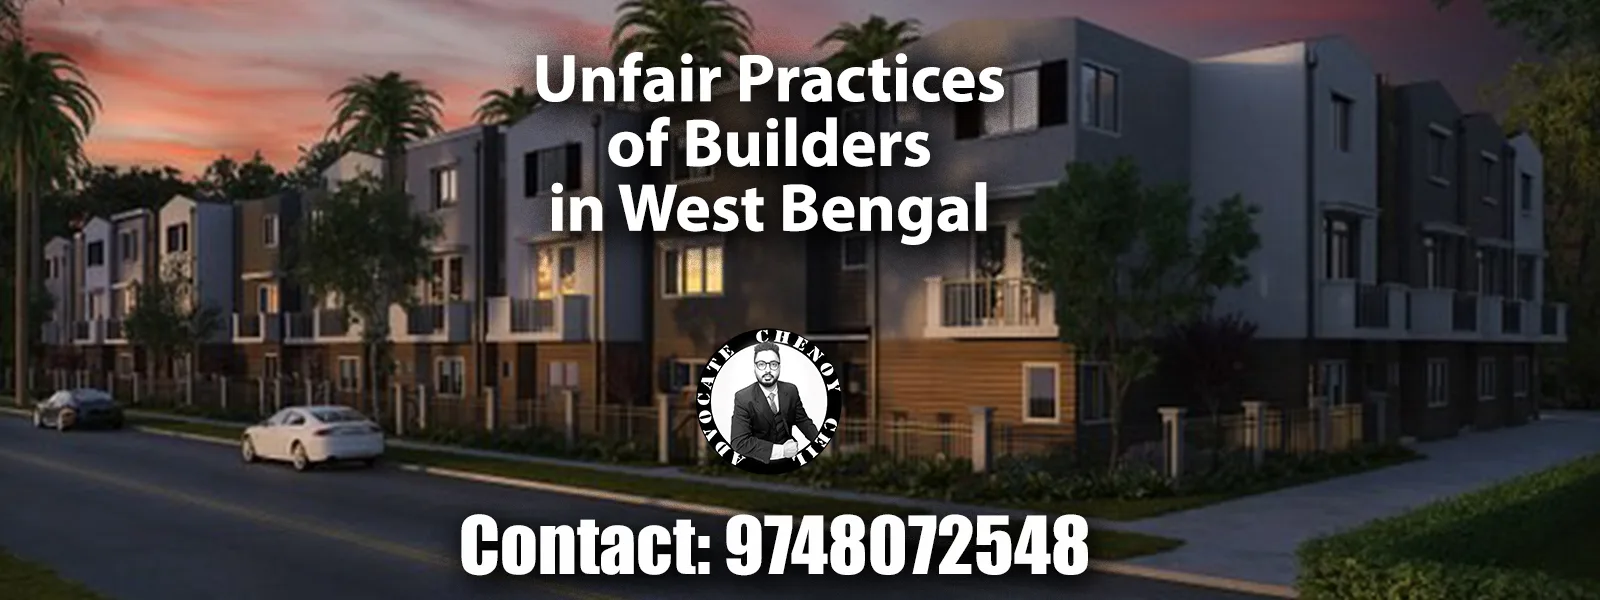 Unfair Practices of Builders